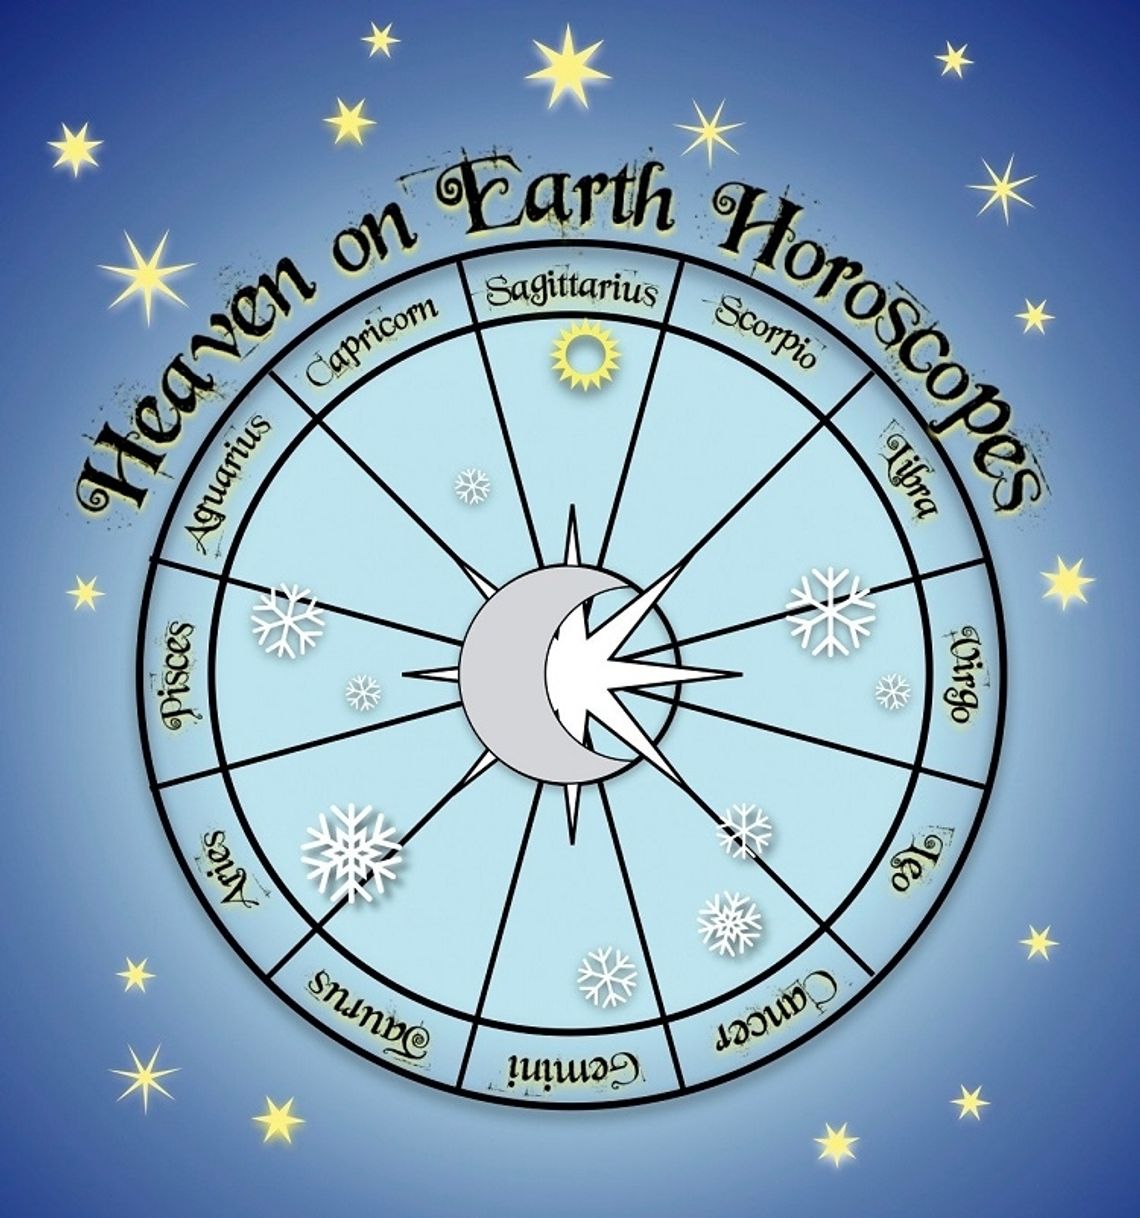 Heaven on Earth Horoscopes: Dec 2 through 8